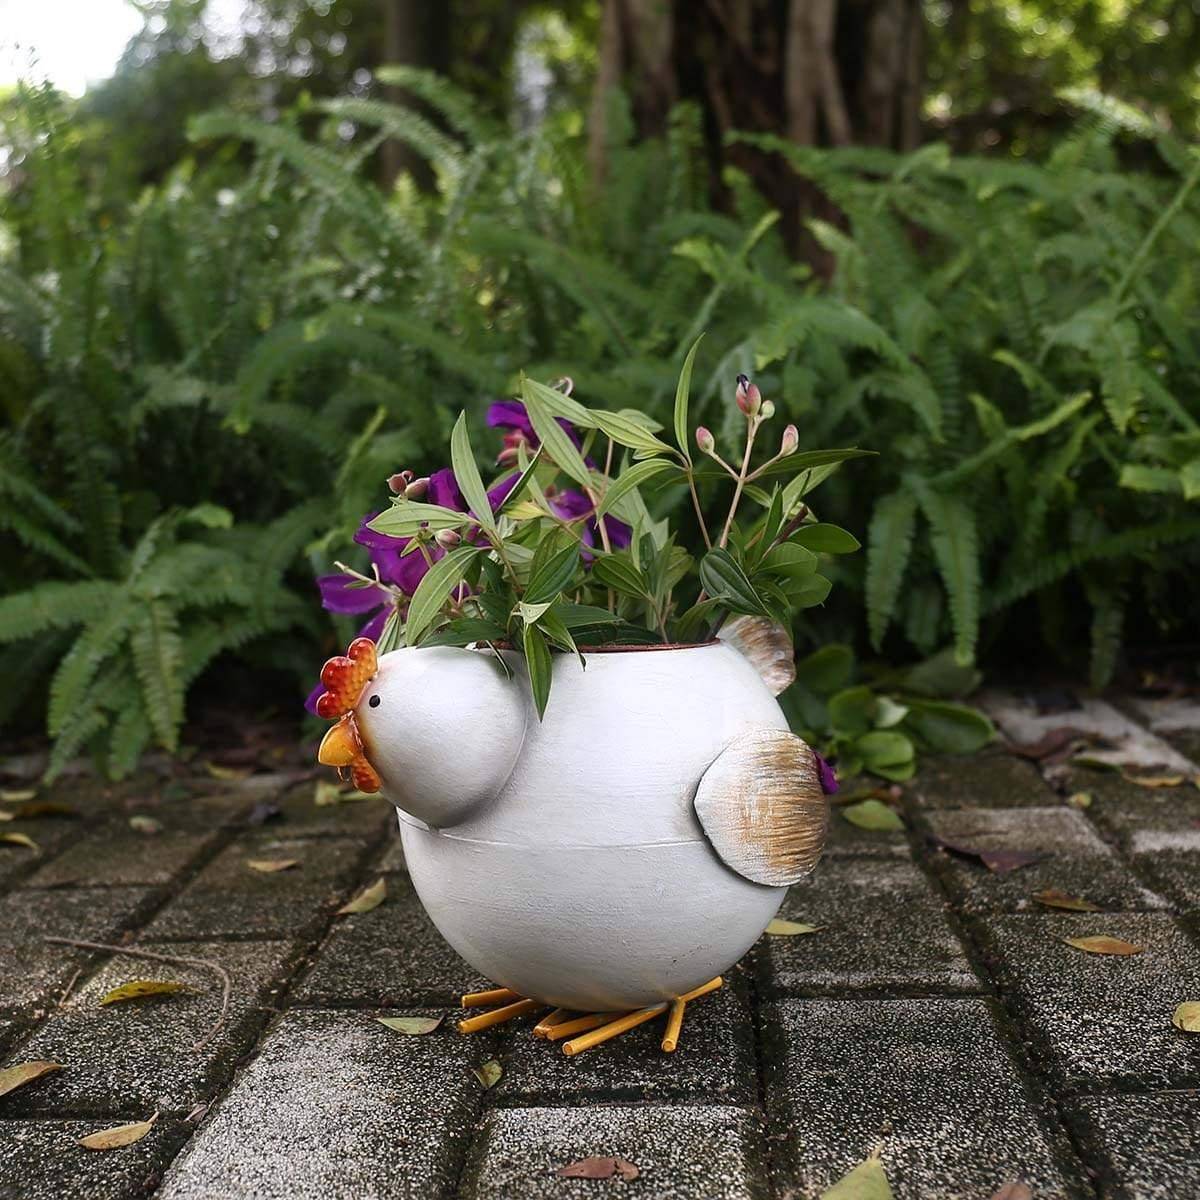 Chicken Garden Planter Flower Pot Decor - Whimsical Touch to Your Garden